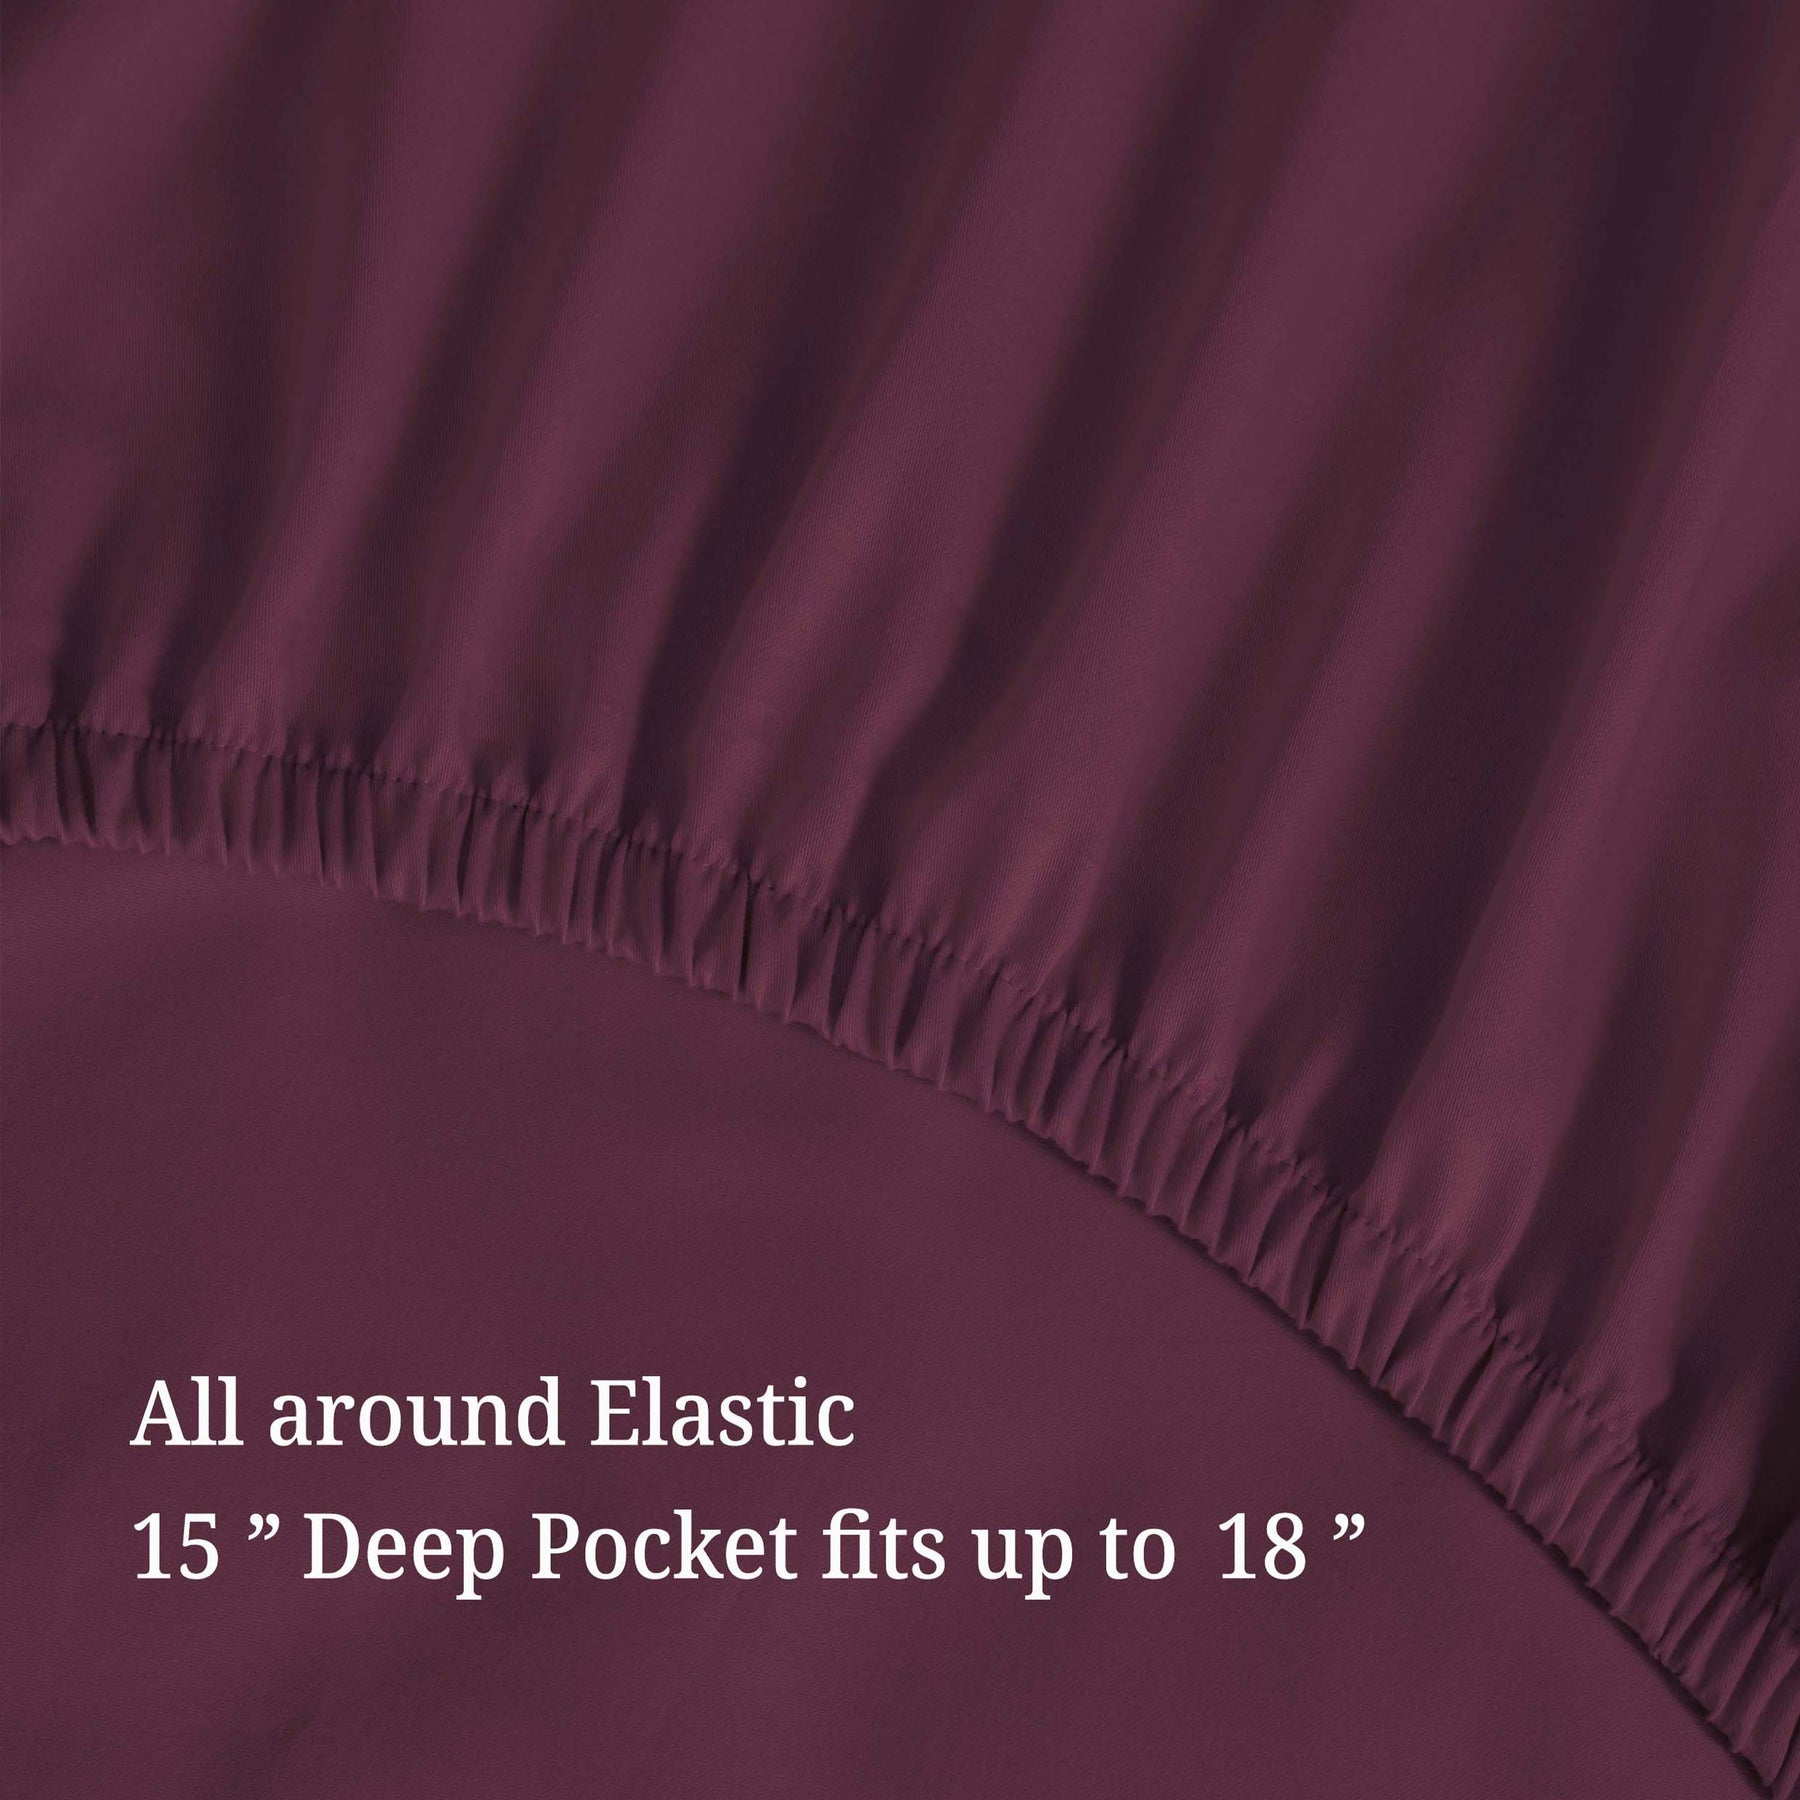 Egyptian Cotton 300 Thread Count Solid Deep Pocket Sheet Set - Plum